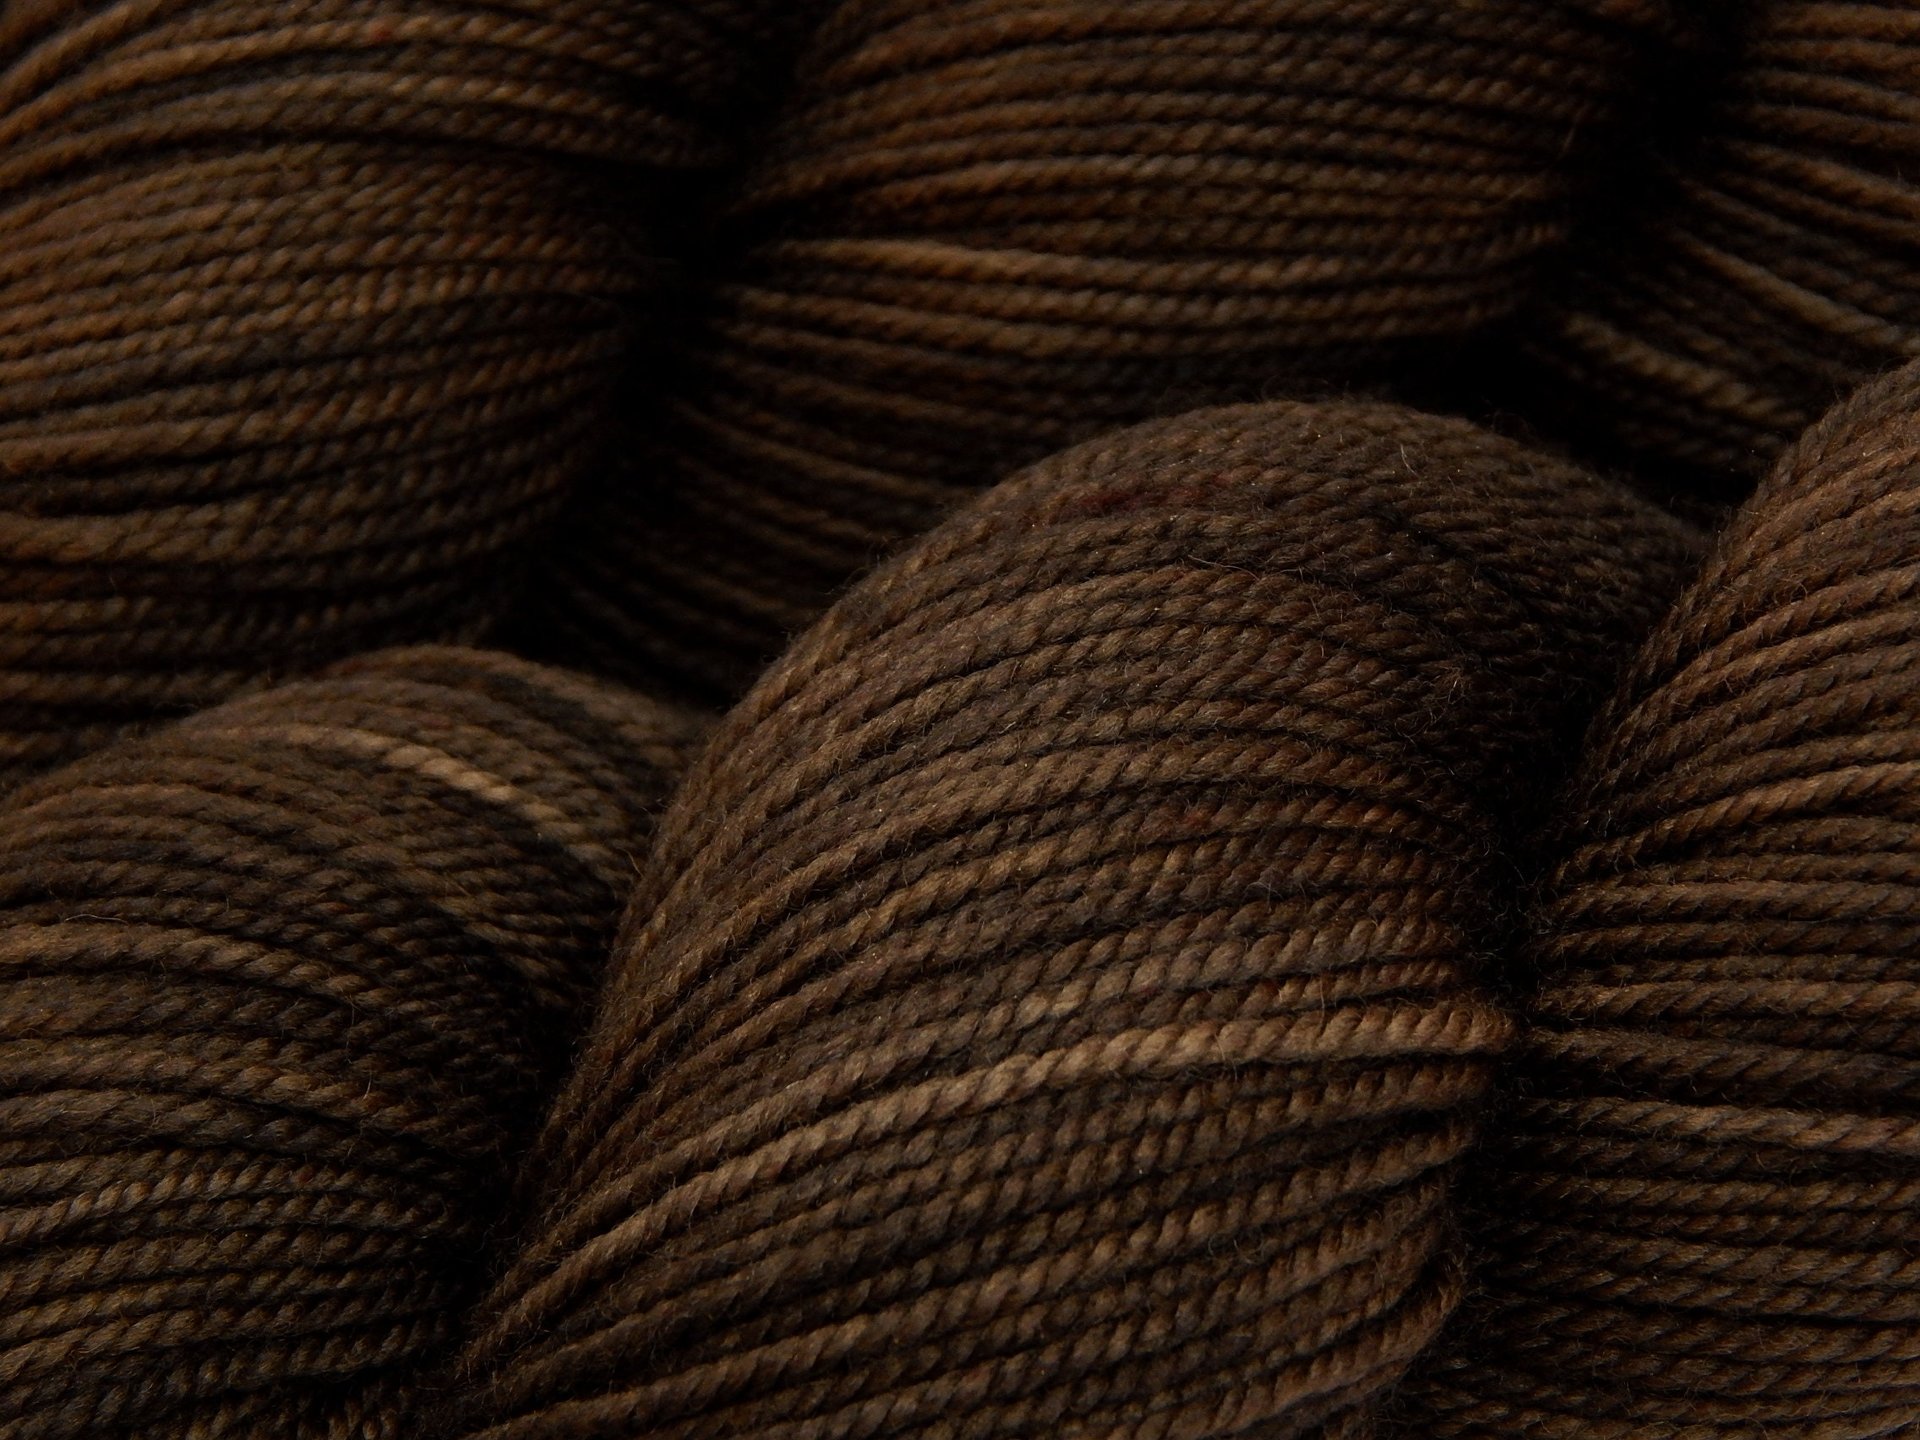 Hand Dyed Yarn, Sport Weight Superwash Merino Wool - Bark Tonal - Chocolate Brown Indie Dyer Knitting Yarn, Semi Solid Dark Brown Sock Yarn